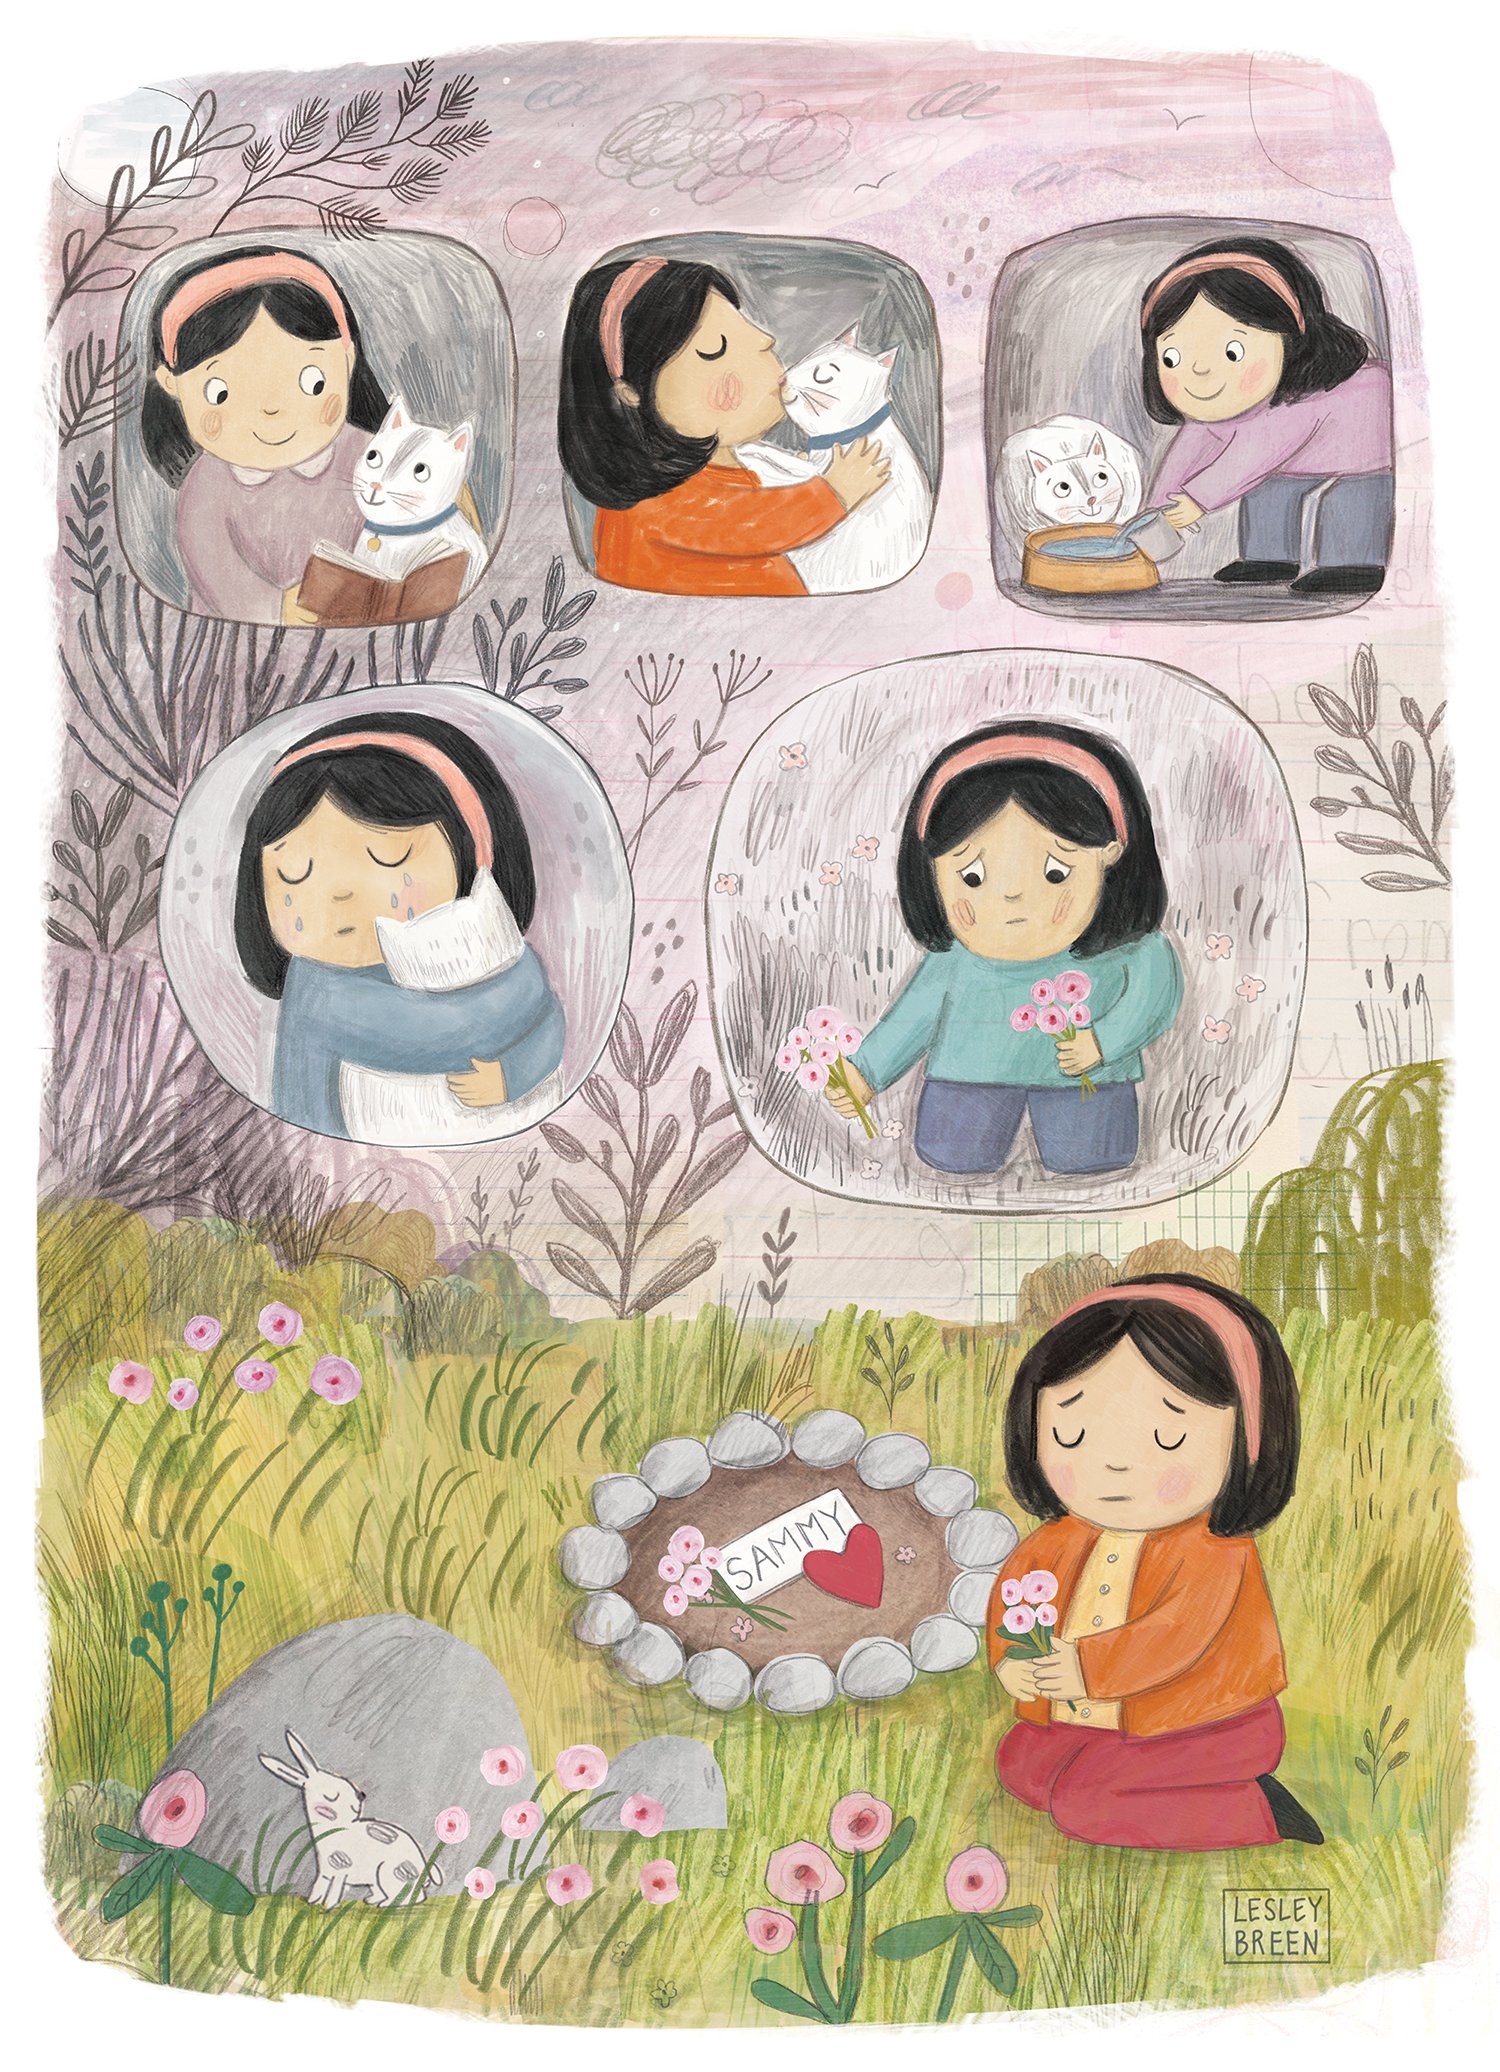 Illustrated-childrensbook-art-of-love-loss-grief-SEL-socialemotionallearning-by-Lesley-Breen.jpg